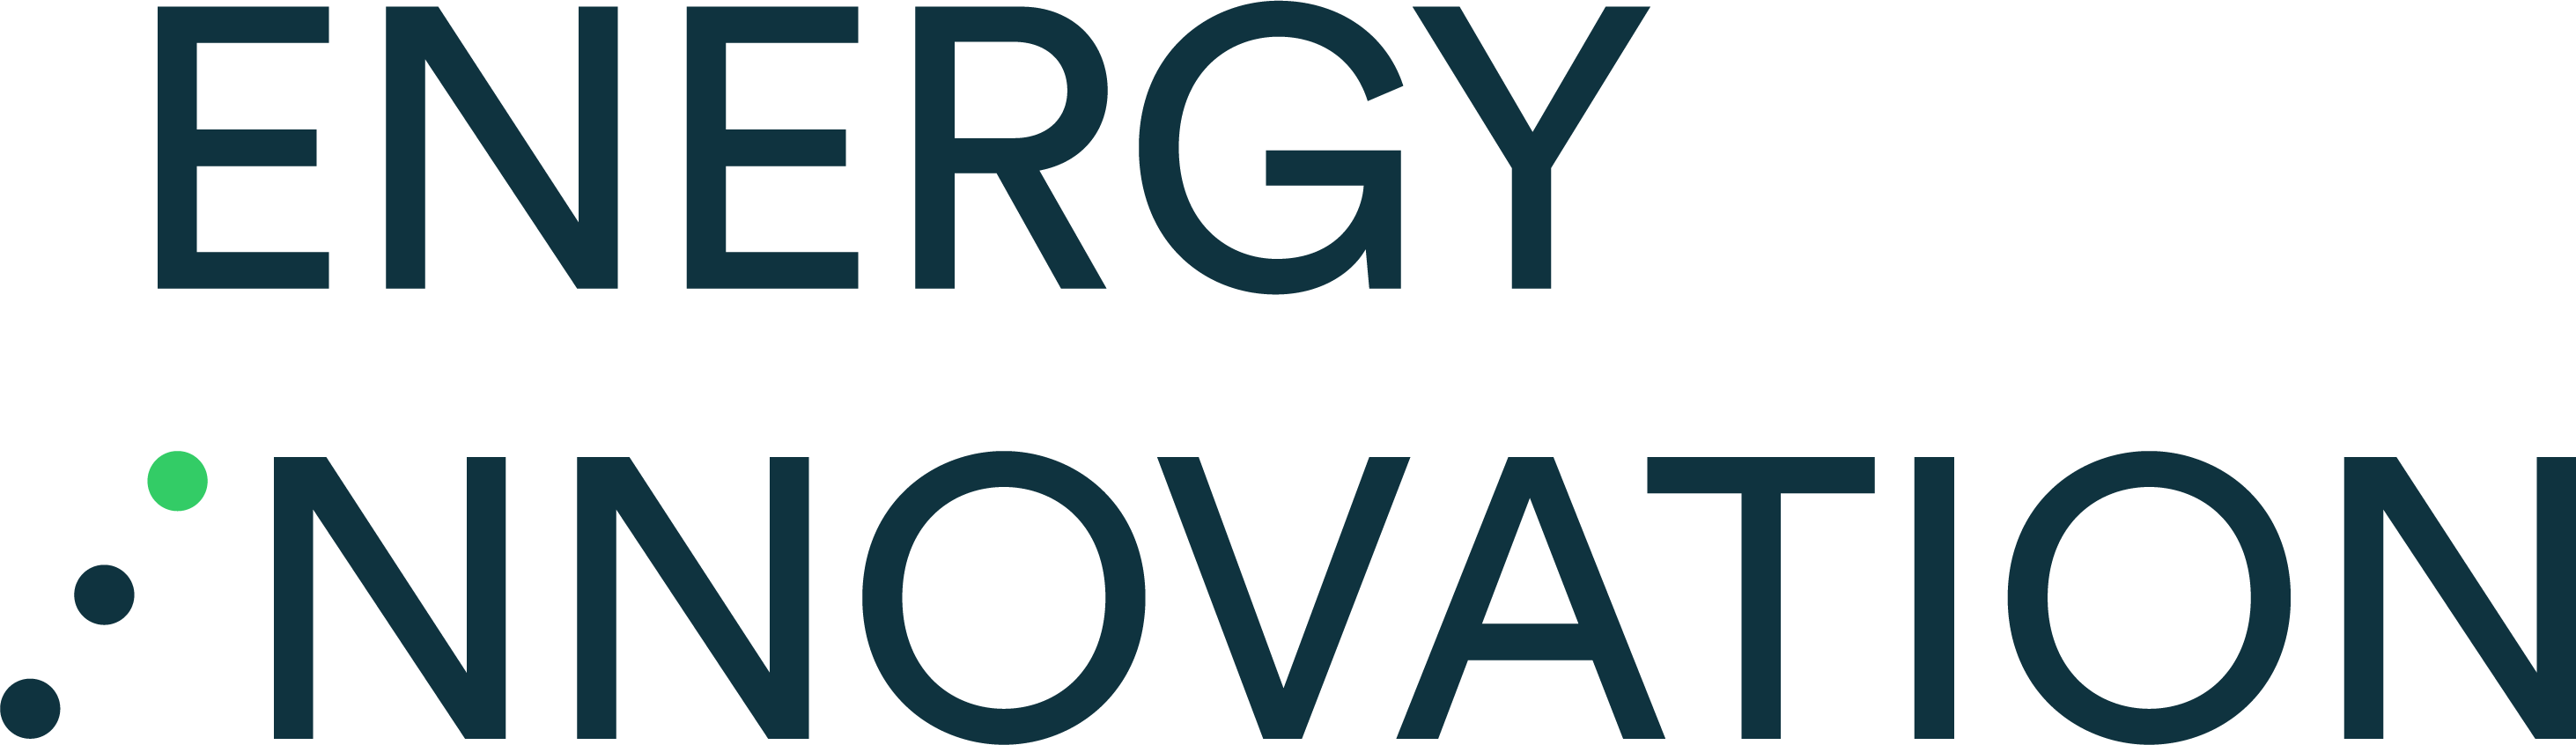 Energy-Innovation_logo_positive